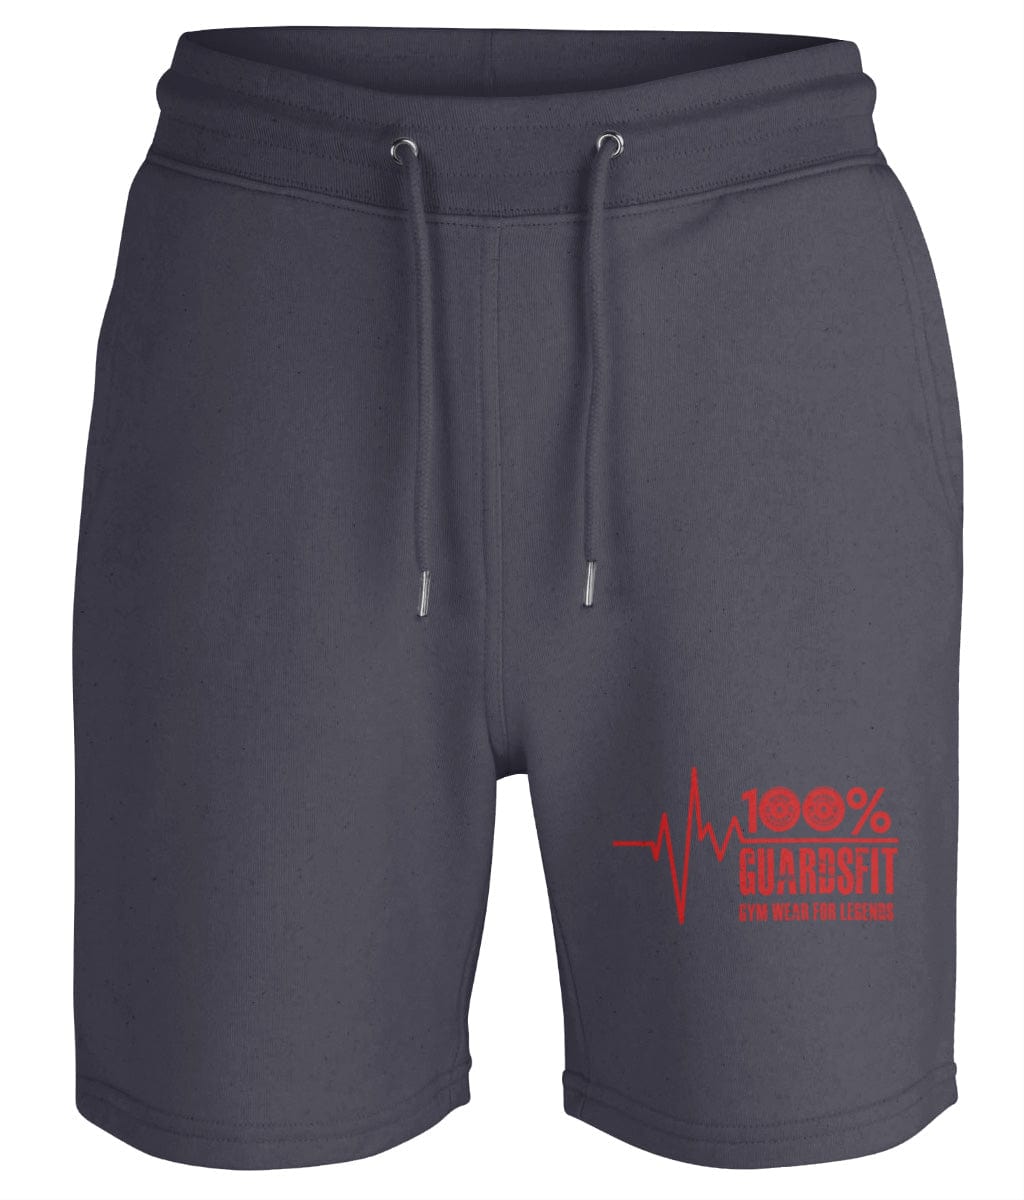 100% GUARDS FIT Organic Training Shorts